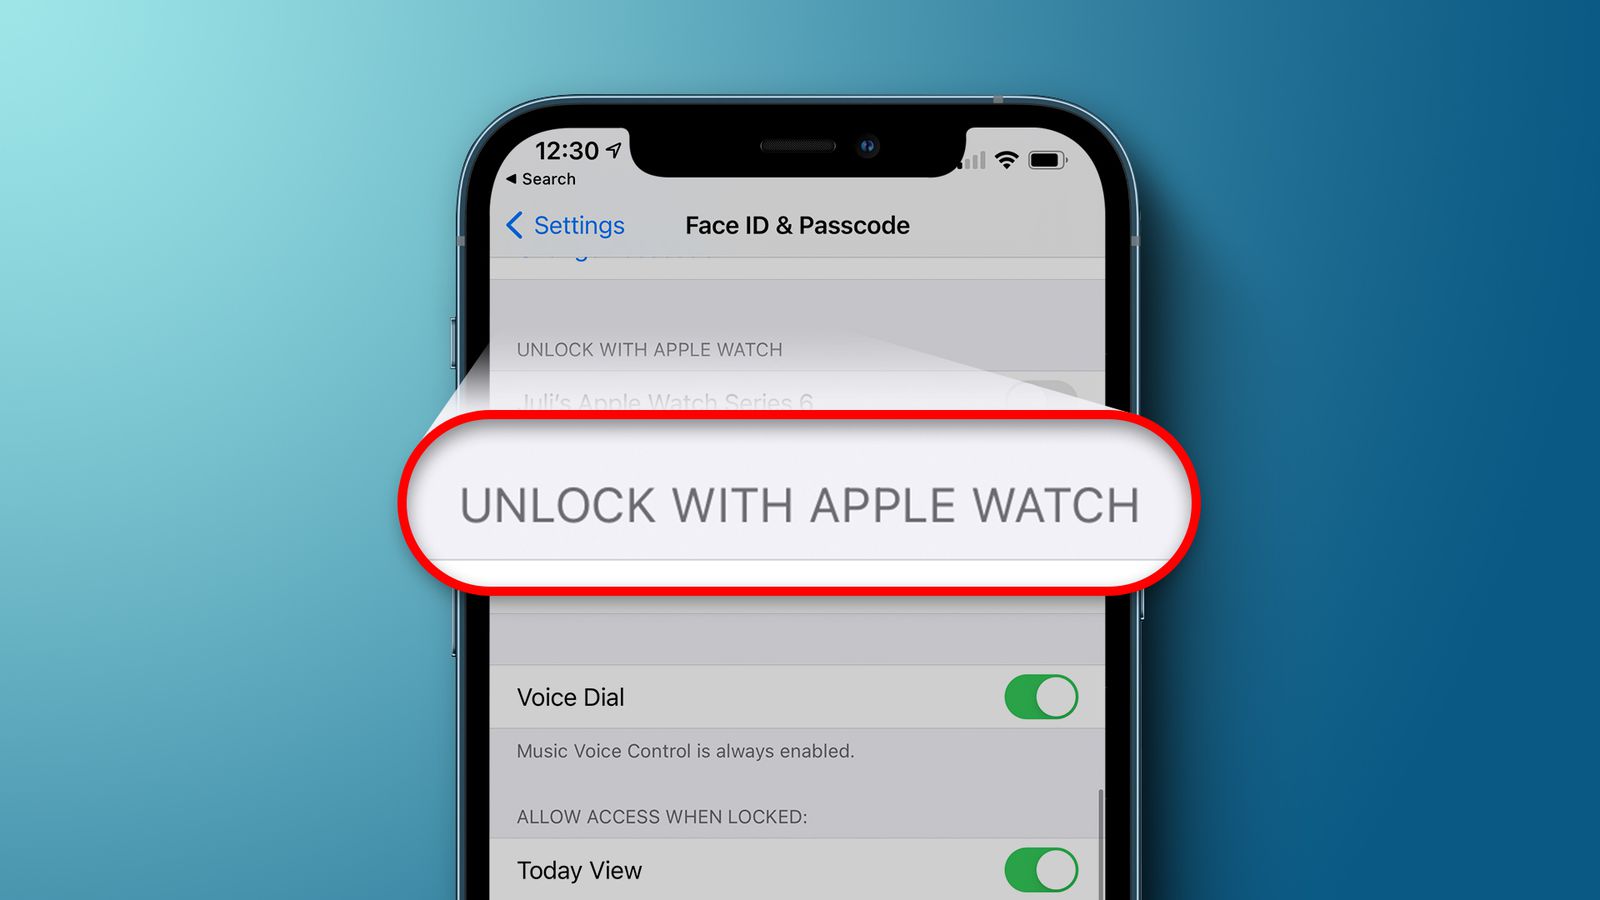 Iphone with apple watch unlock Apple Watch